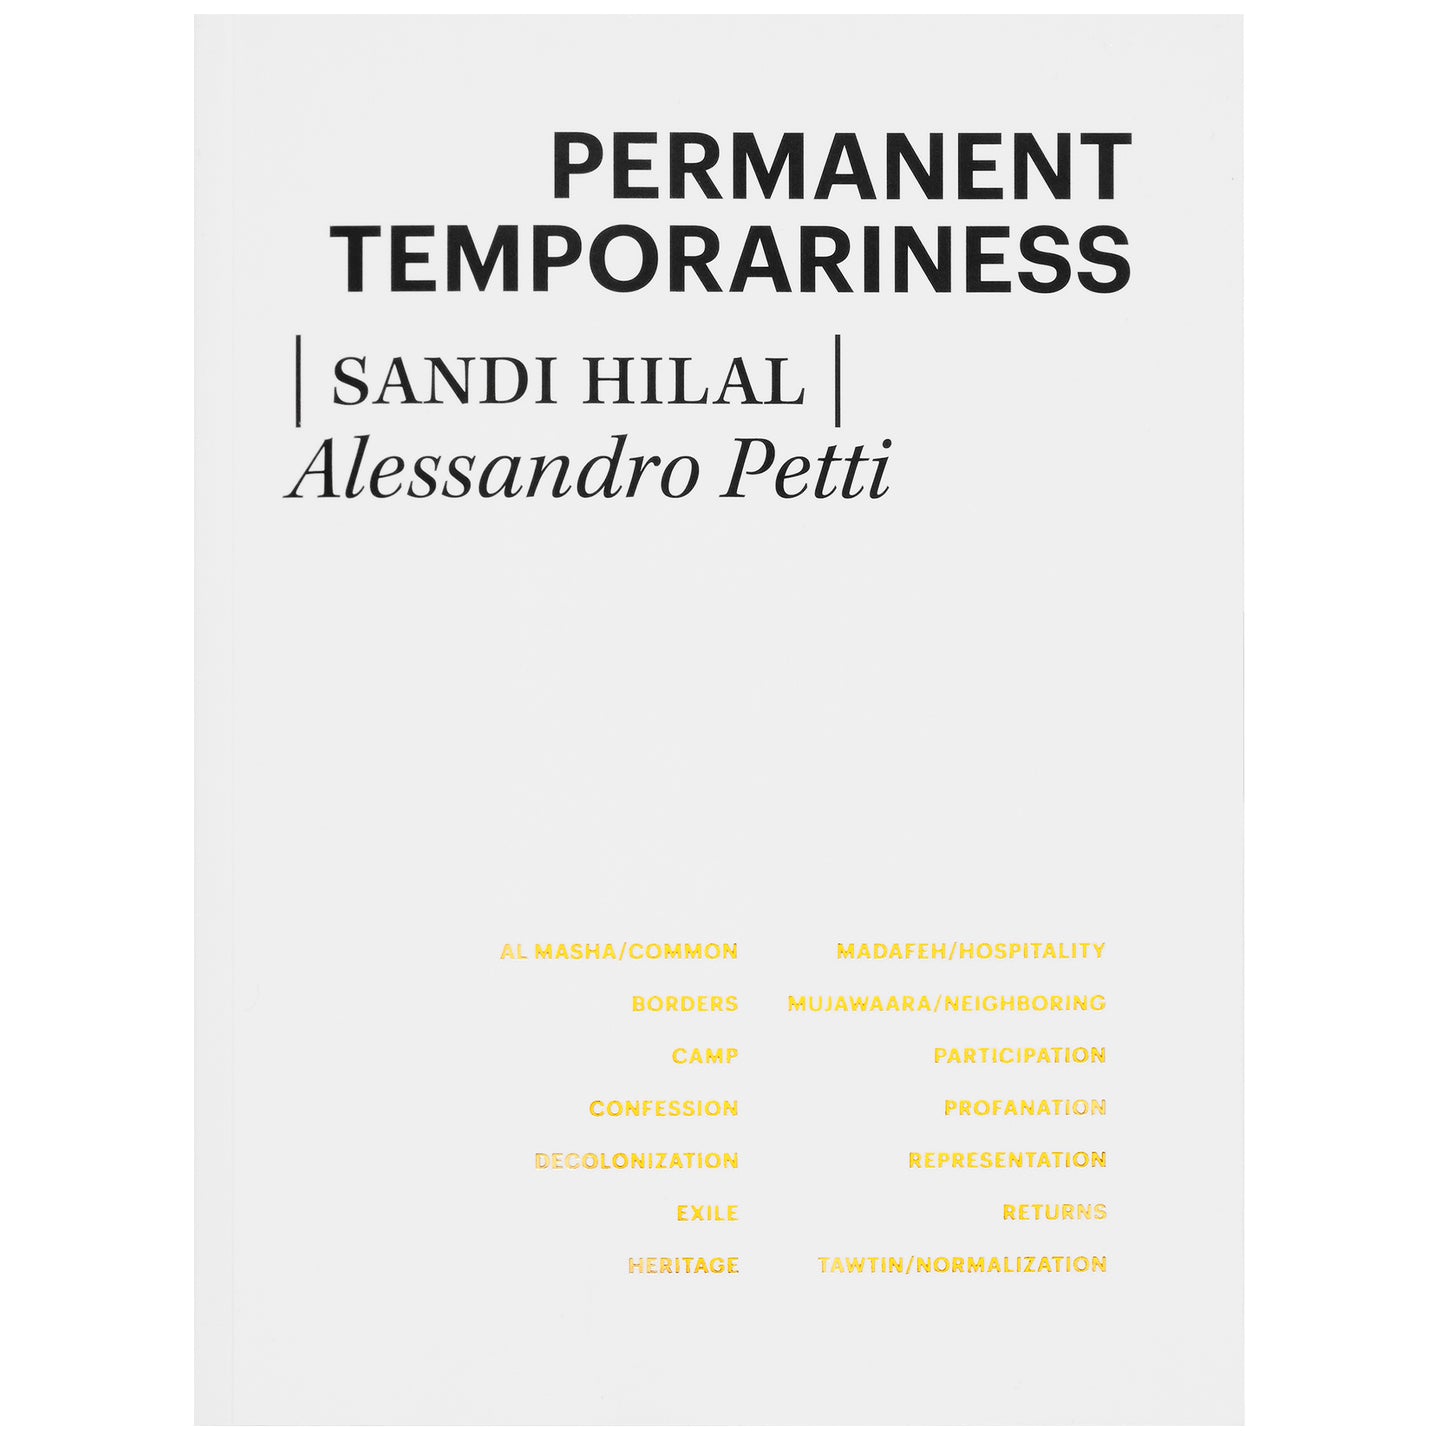 PERMANENT TEMPORARINESS